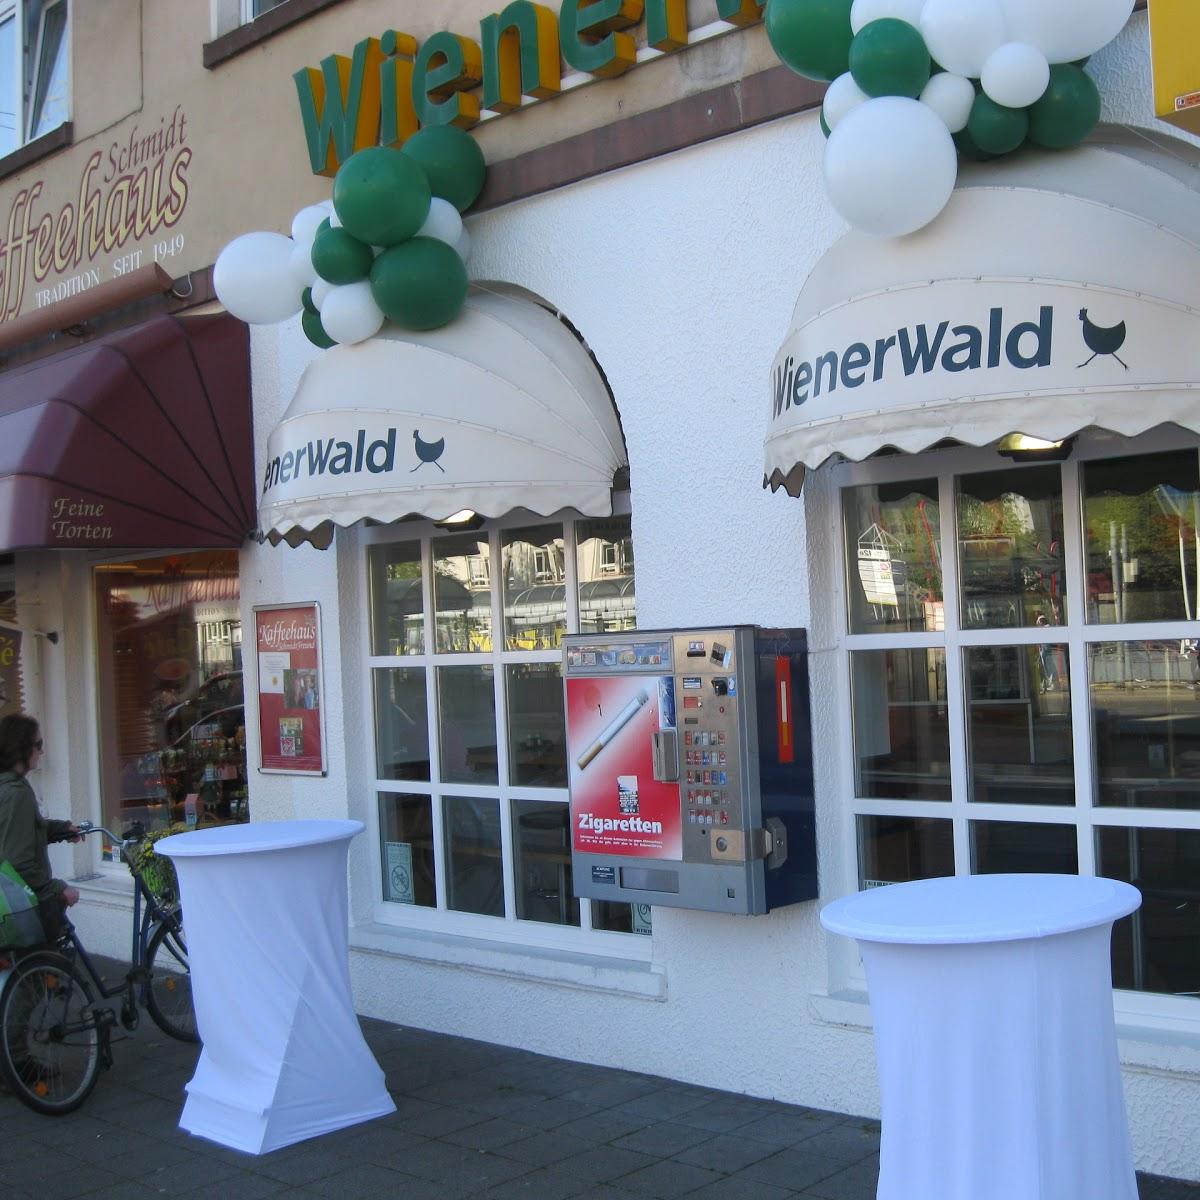 Restaurant "Wienerwald" in Karlsruhe